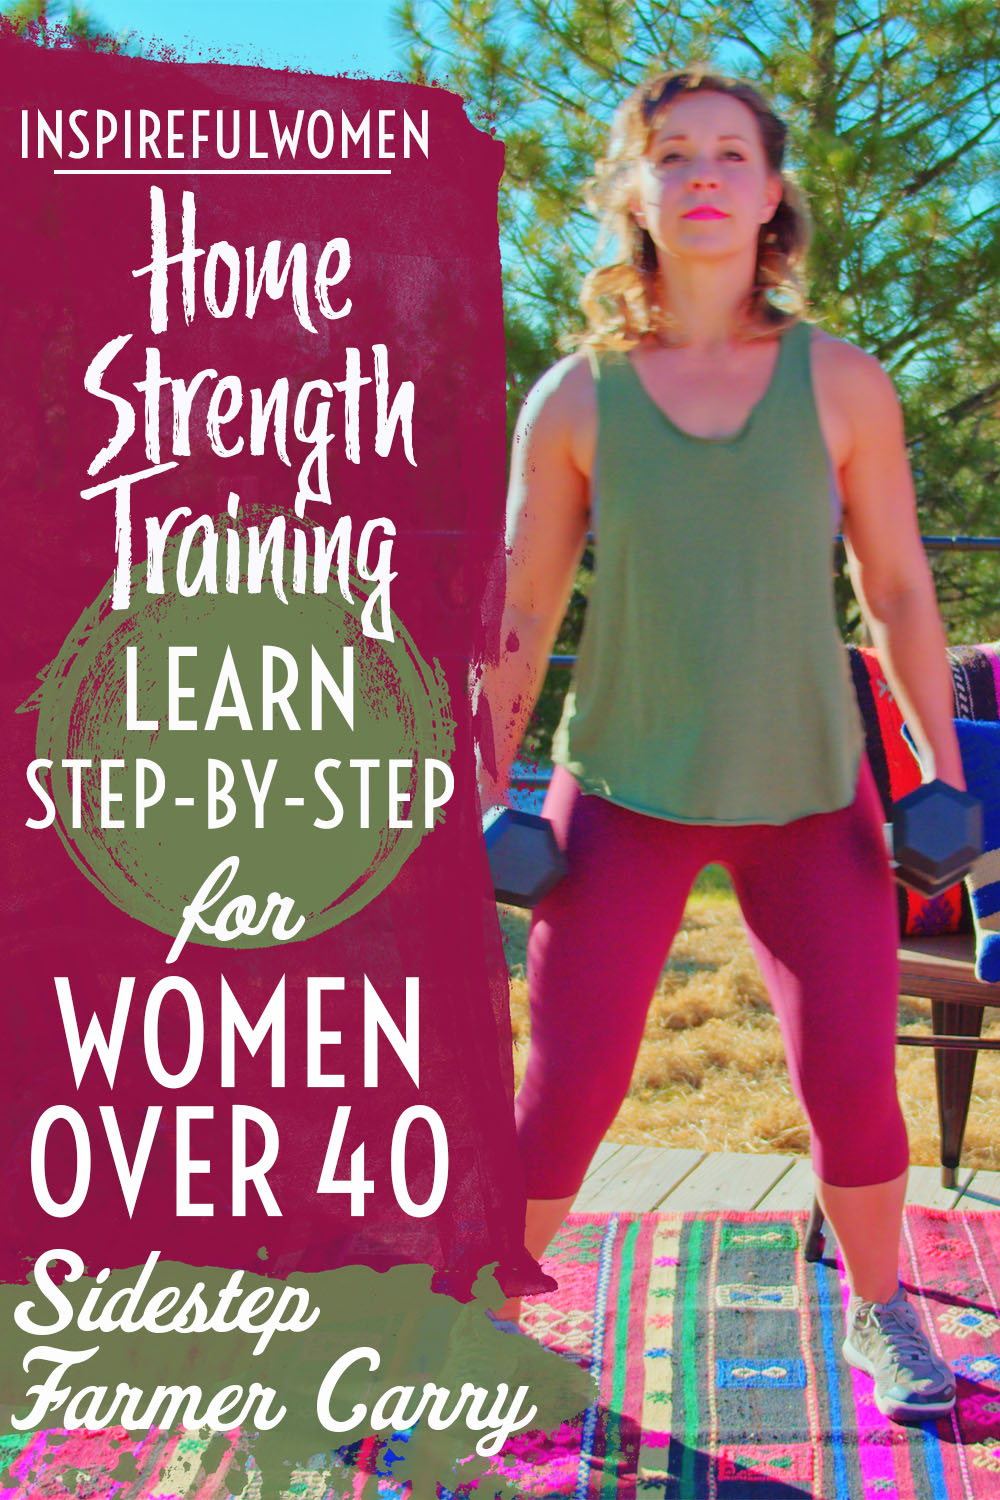 side-step-farmer-carry-dumbbells-total-body-core-exercise-women-over-40